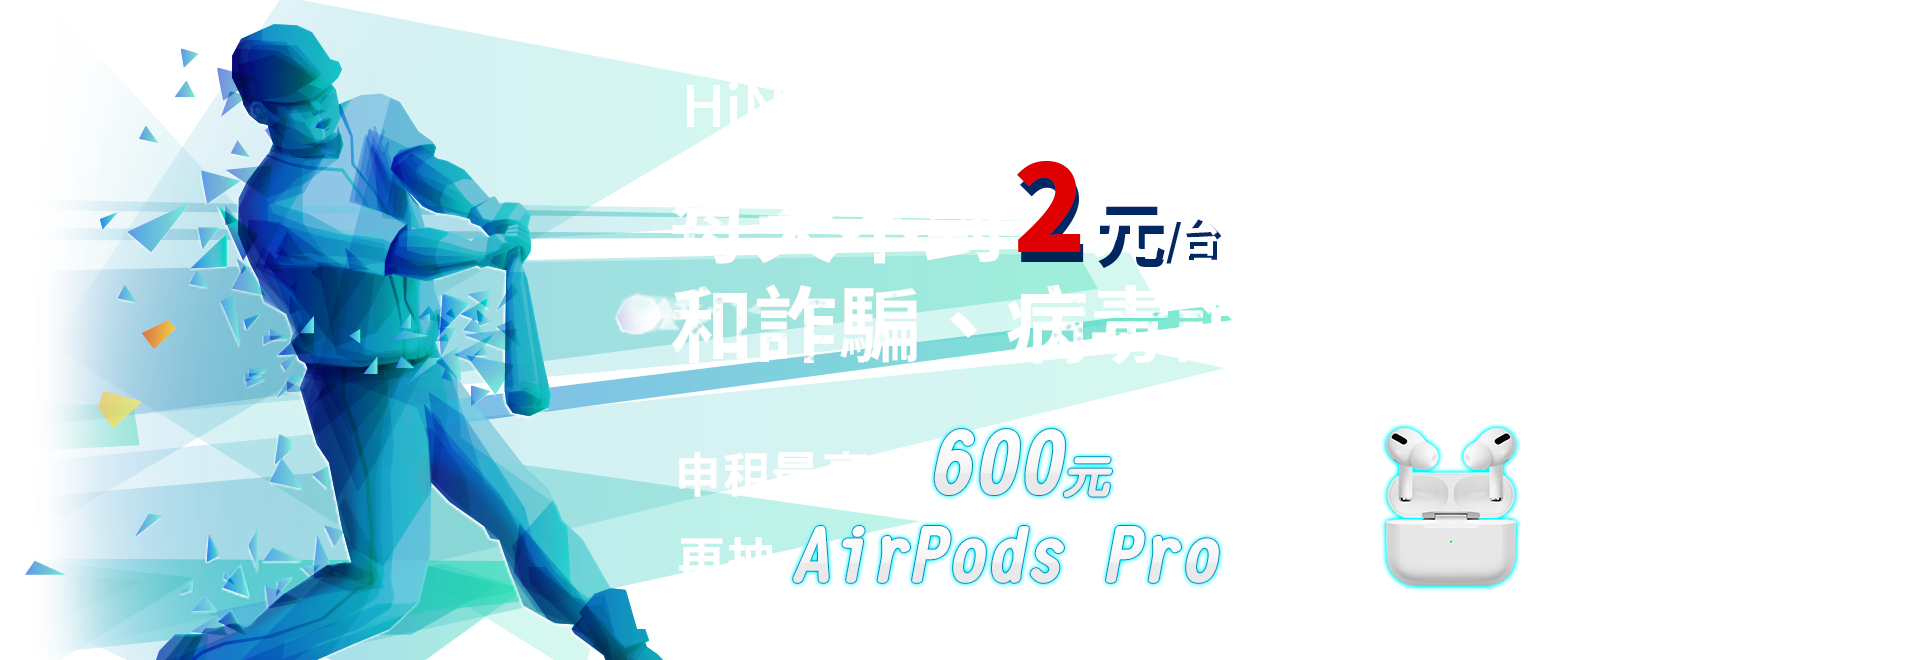 HiNet PC-cillin 每天不到2元/台 和詐騙、病毒說Bye-Bye!